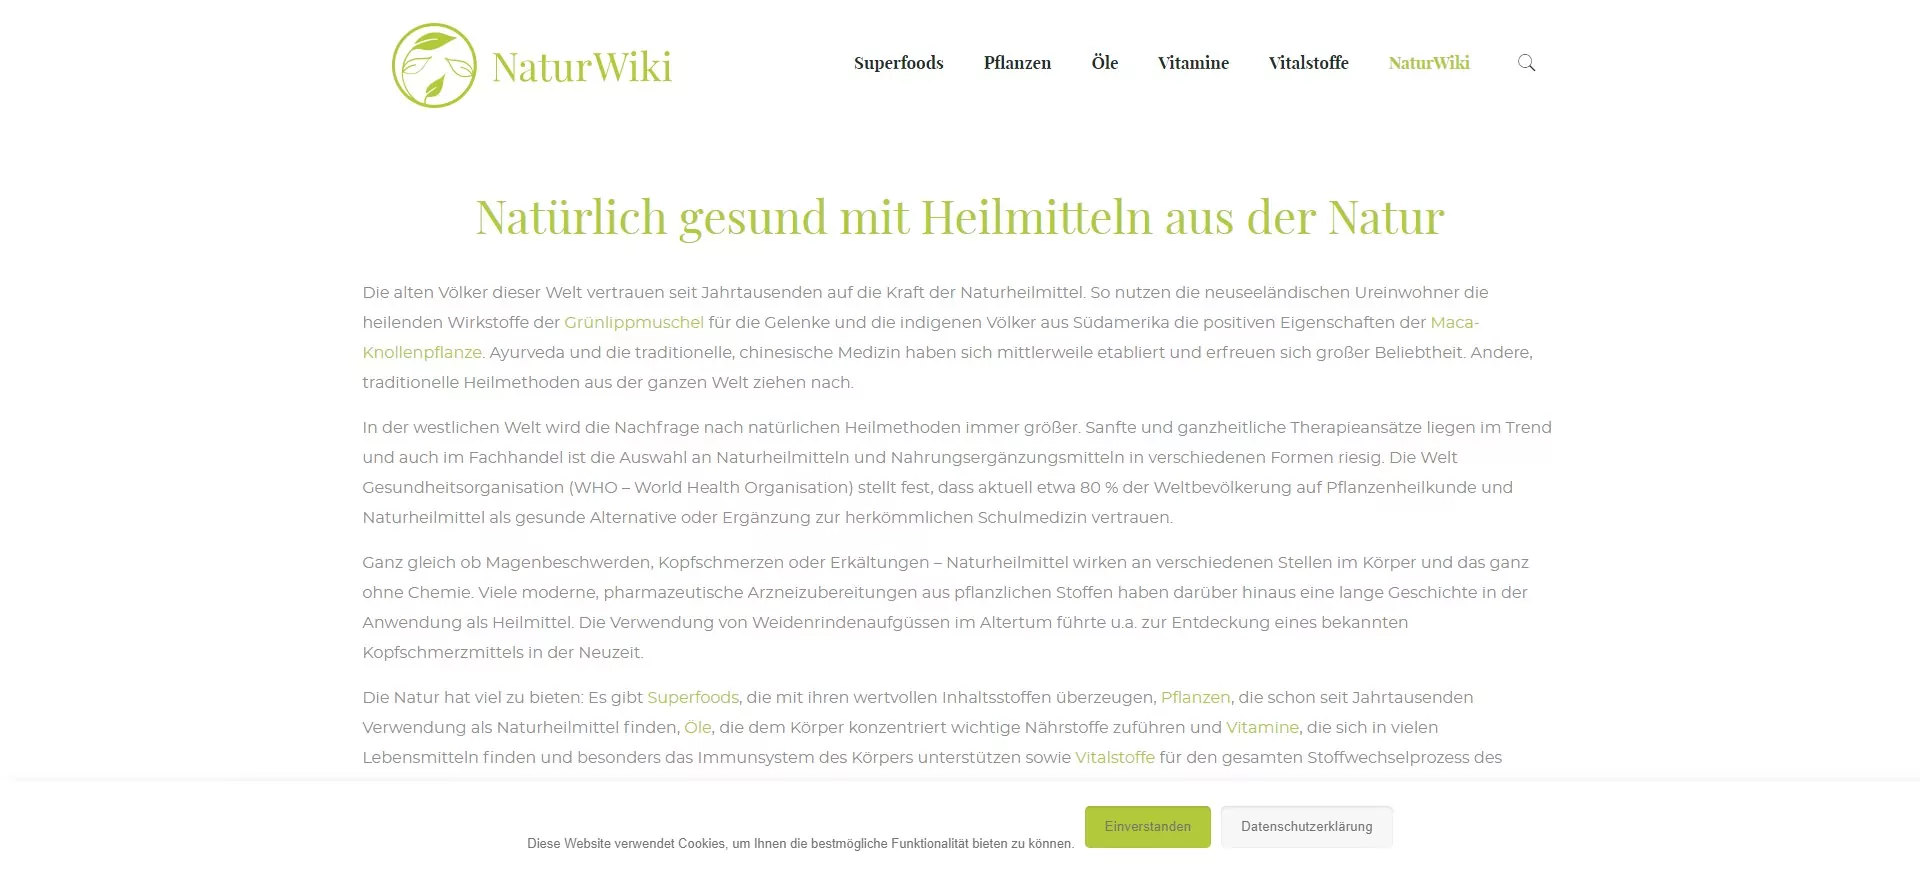 Natur Wiki